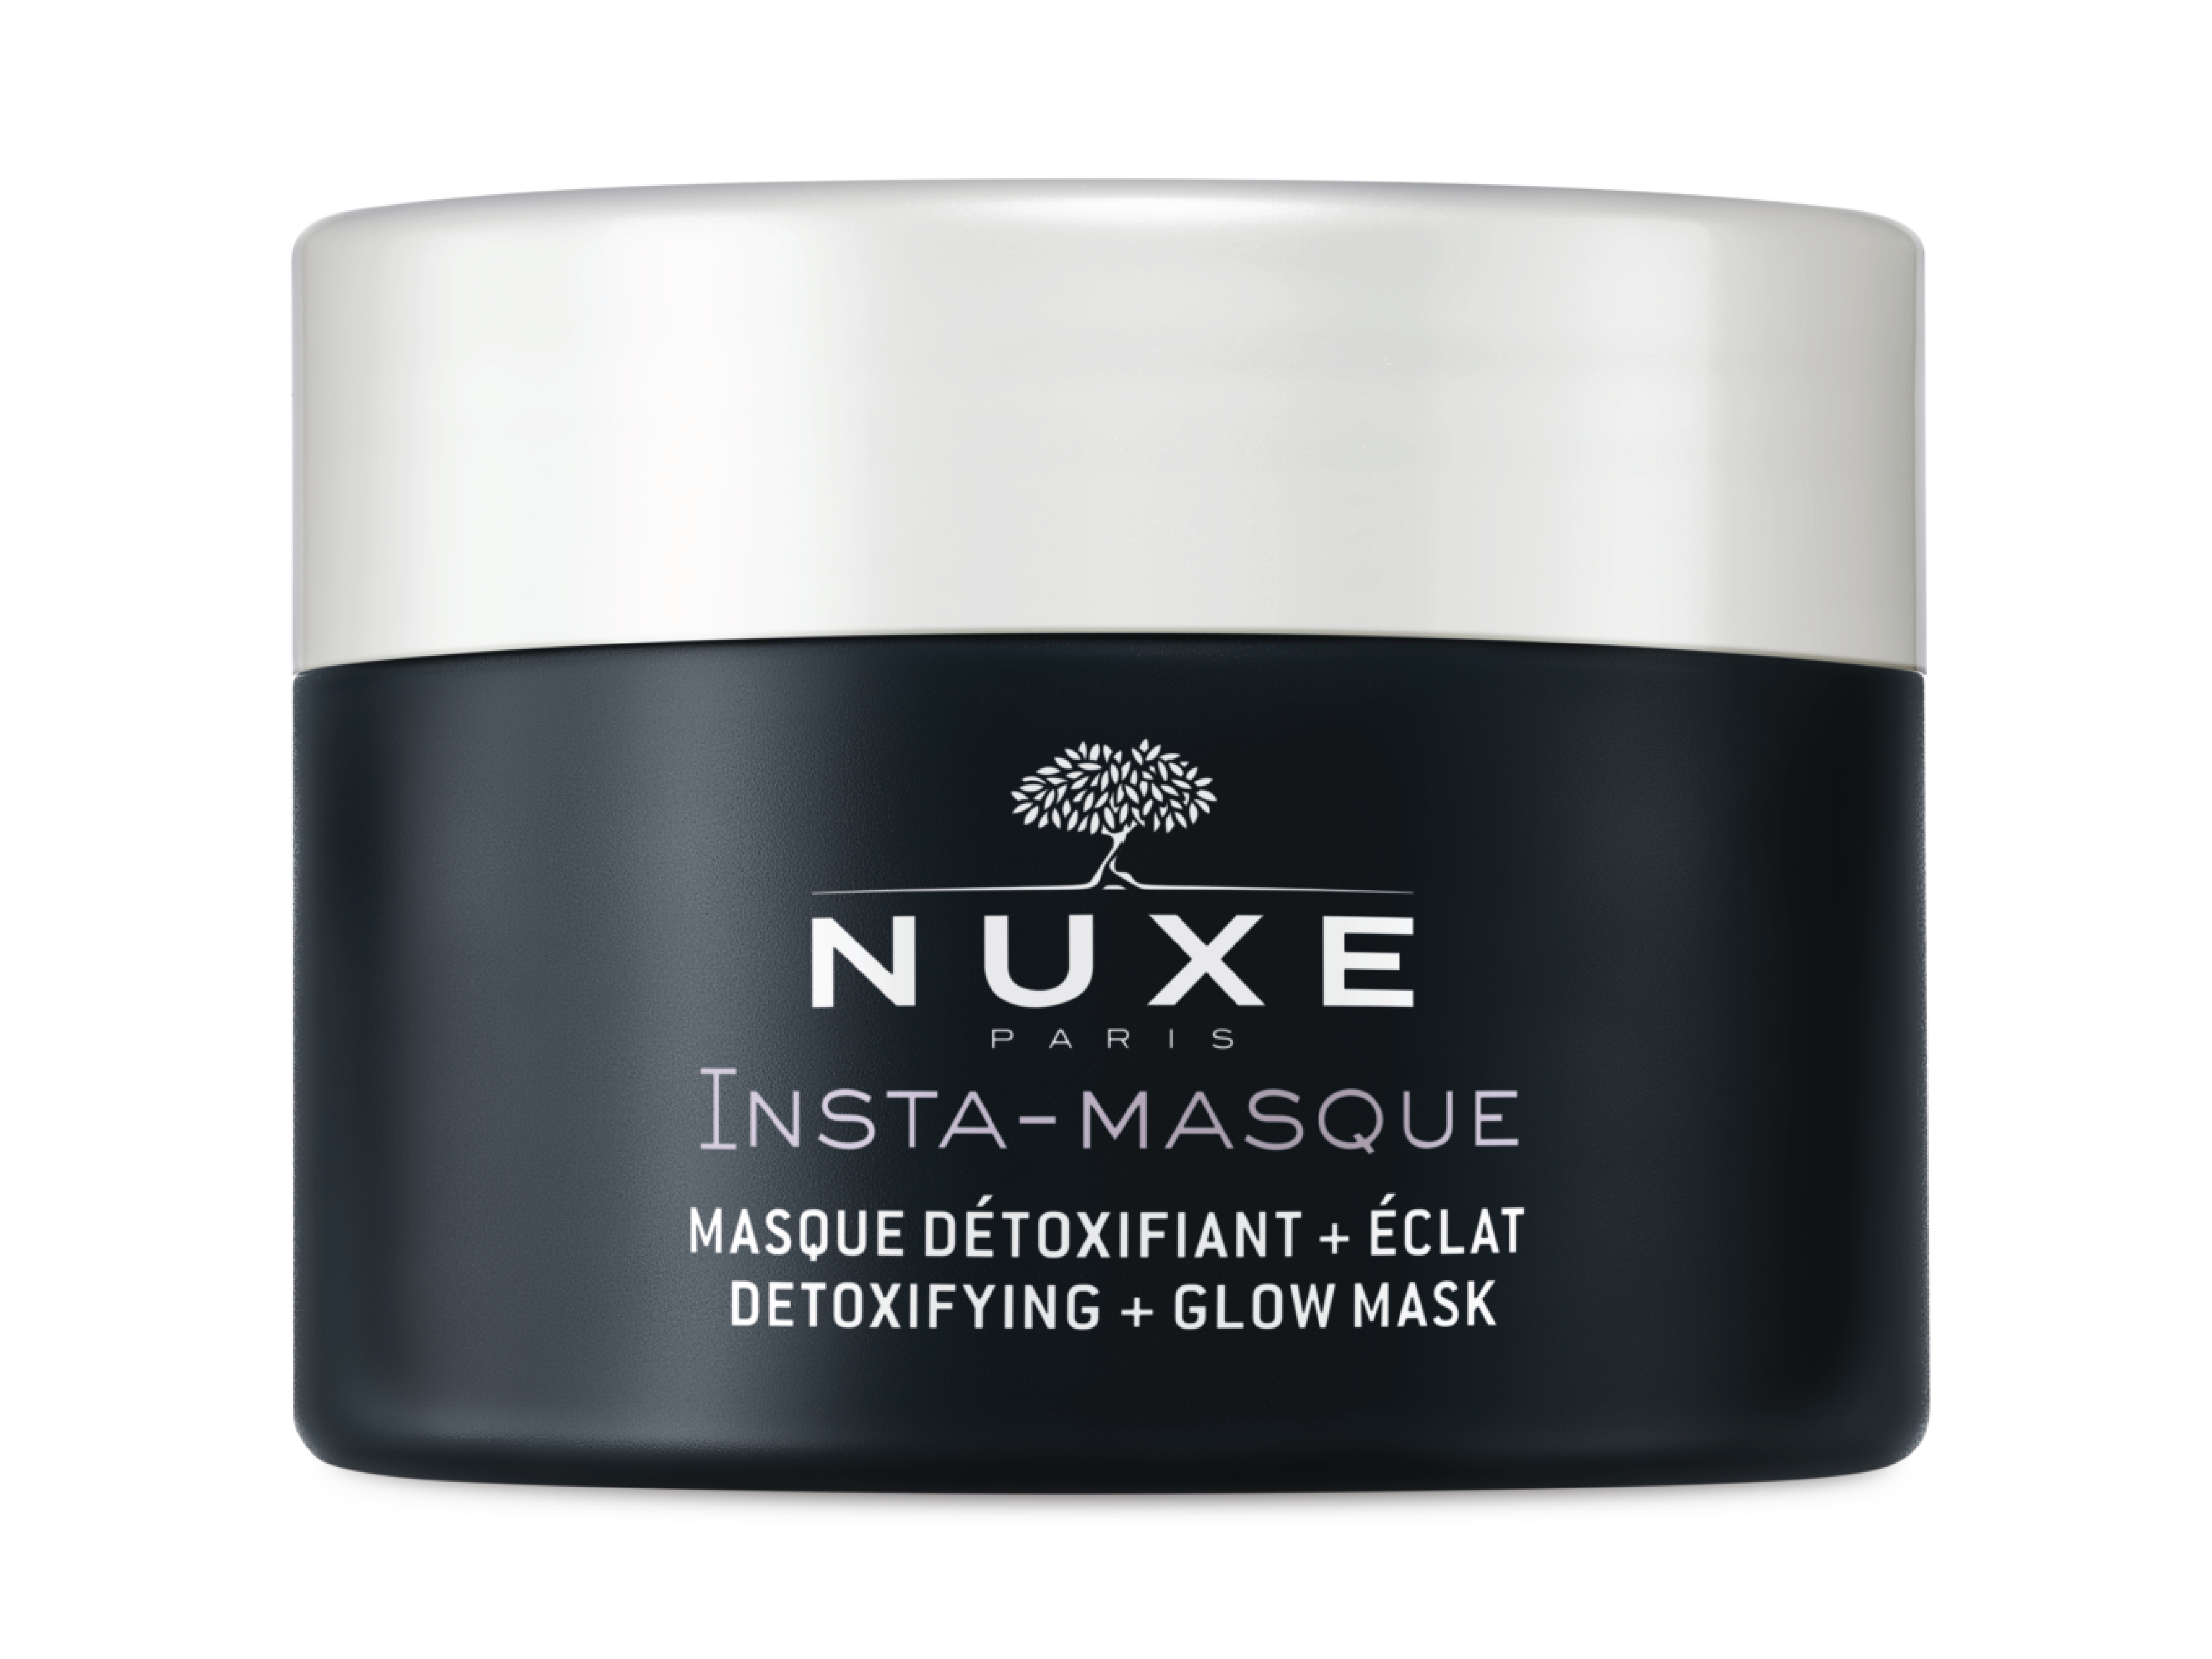 NUXE Insta-Masque Detoxifying Mask, 50 ml